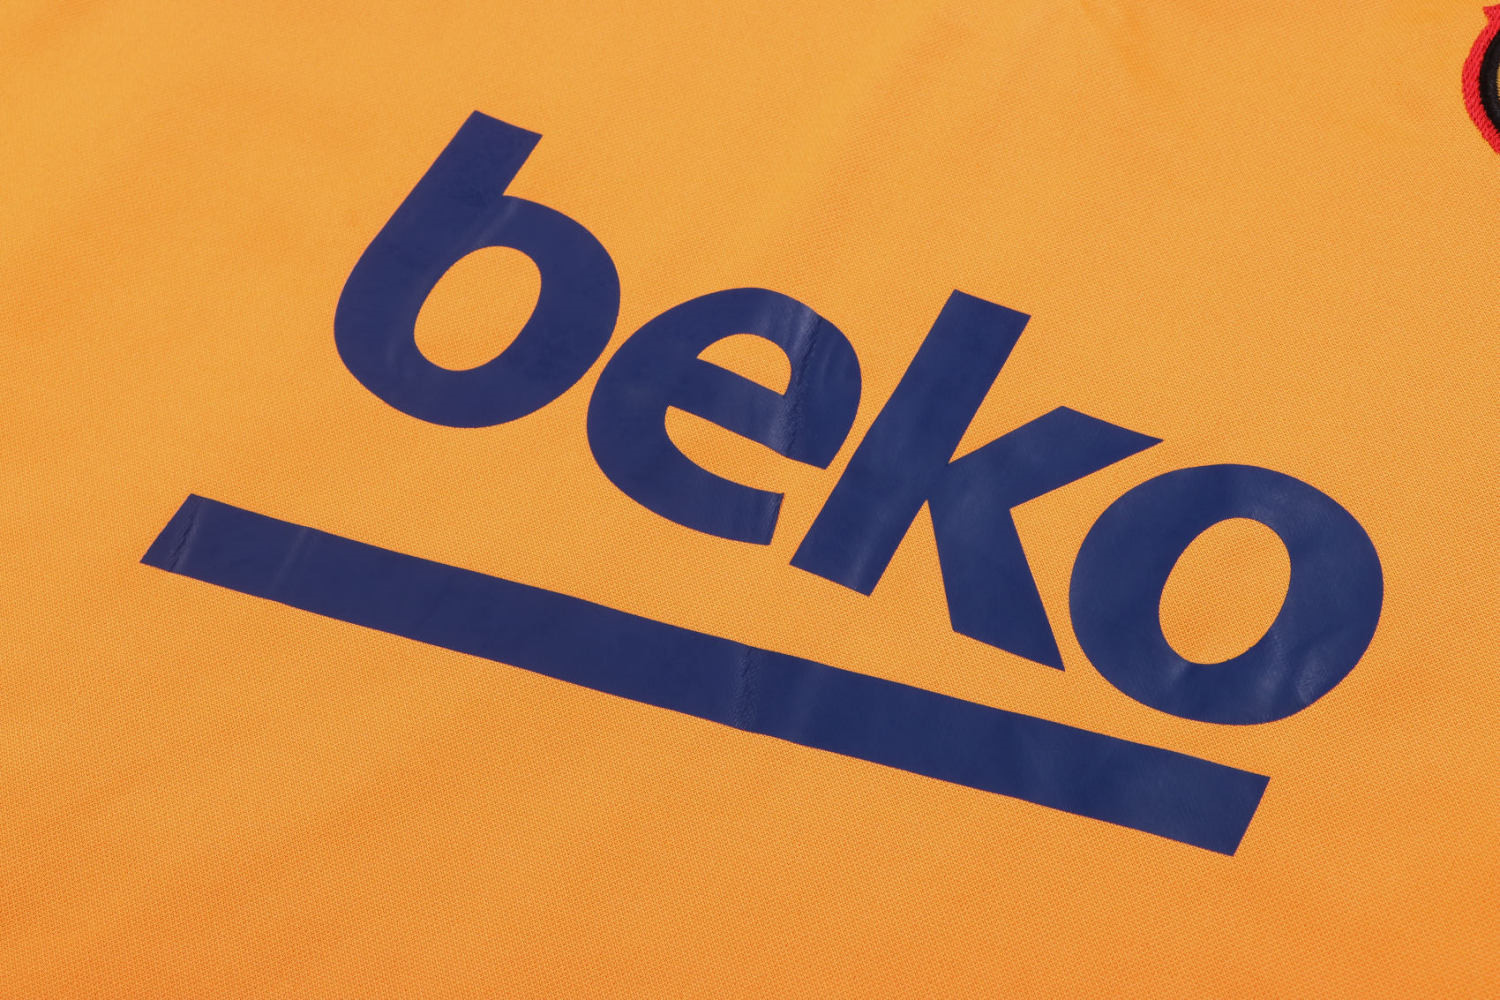 Barcelona Soccer Training Suit Orange 2022/23 Mens